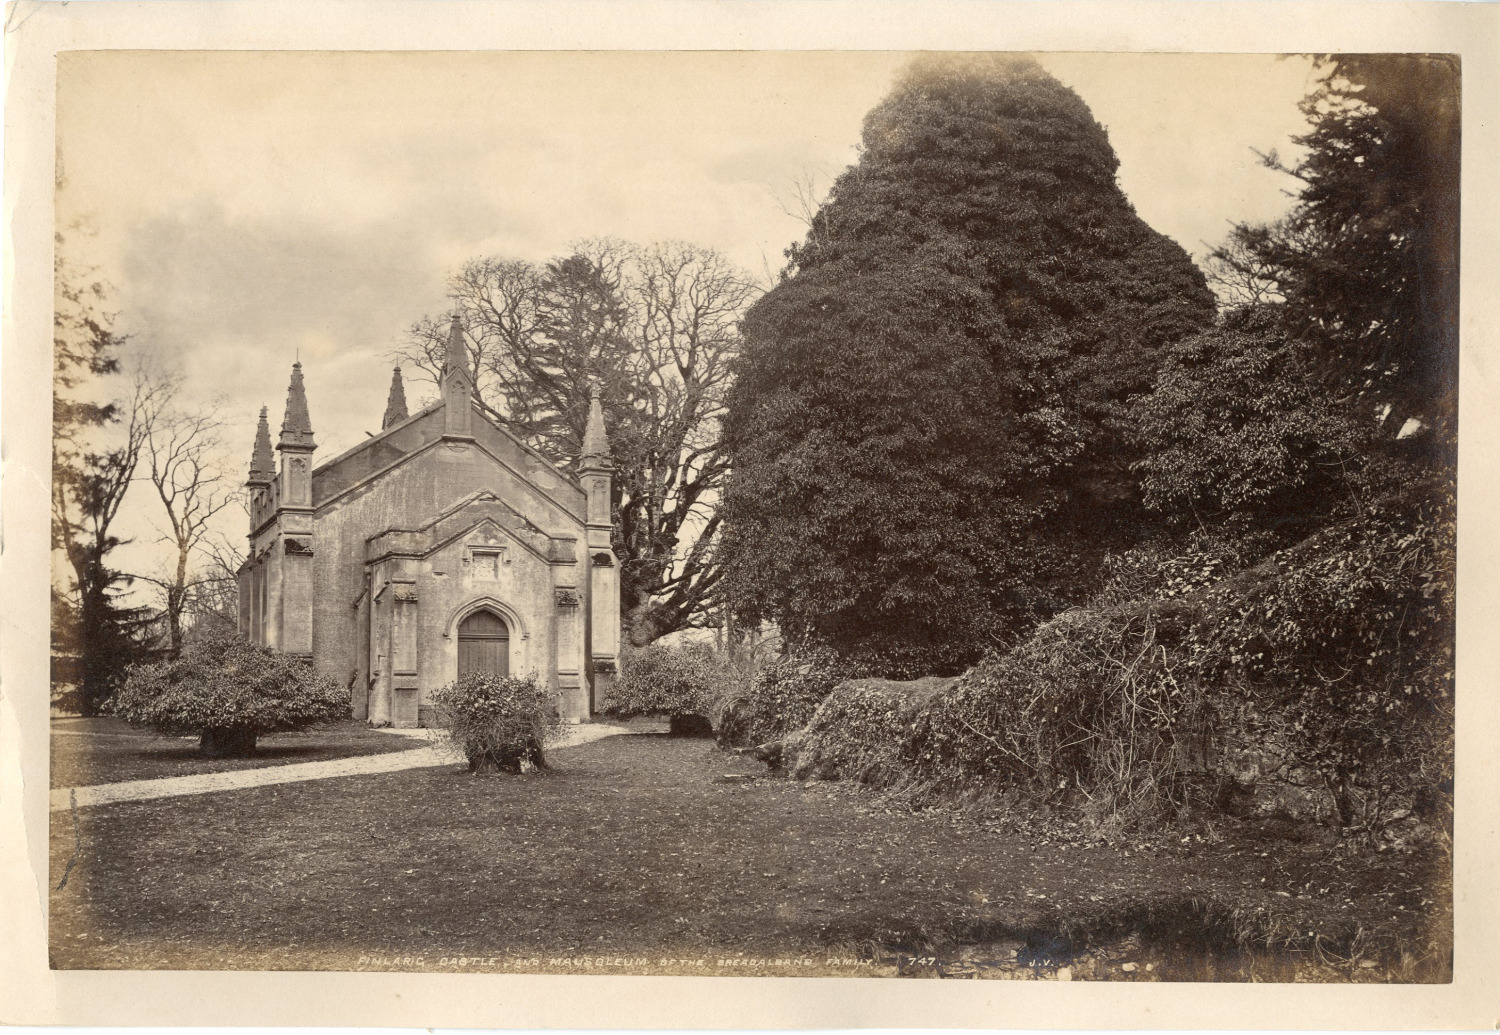 J.V. United Kingdom, Finlarig Castle and Mausoleum of the Breadalbane family vintag